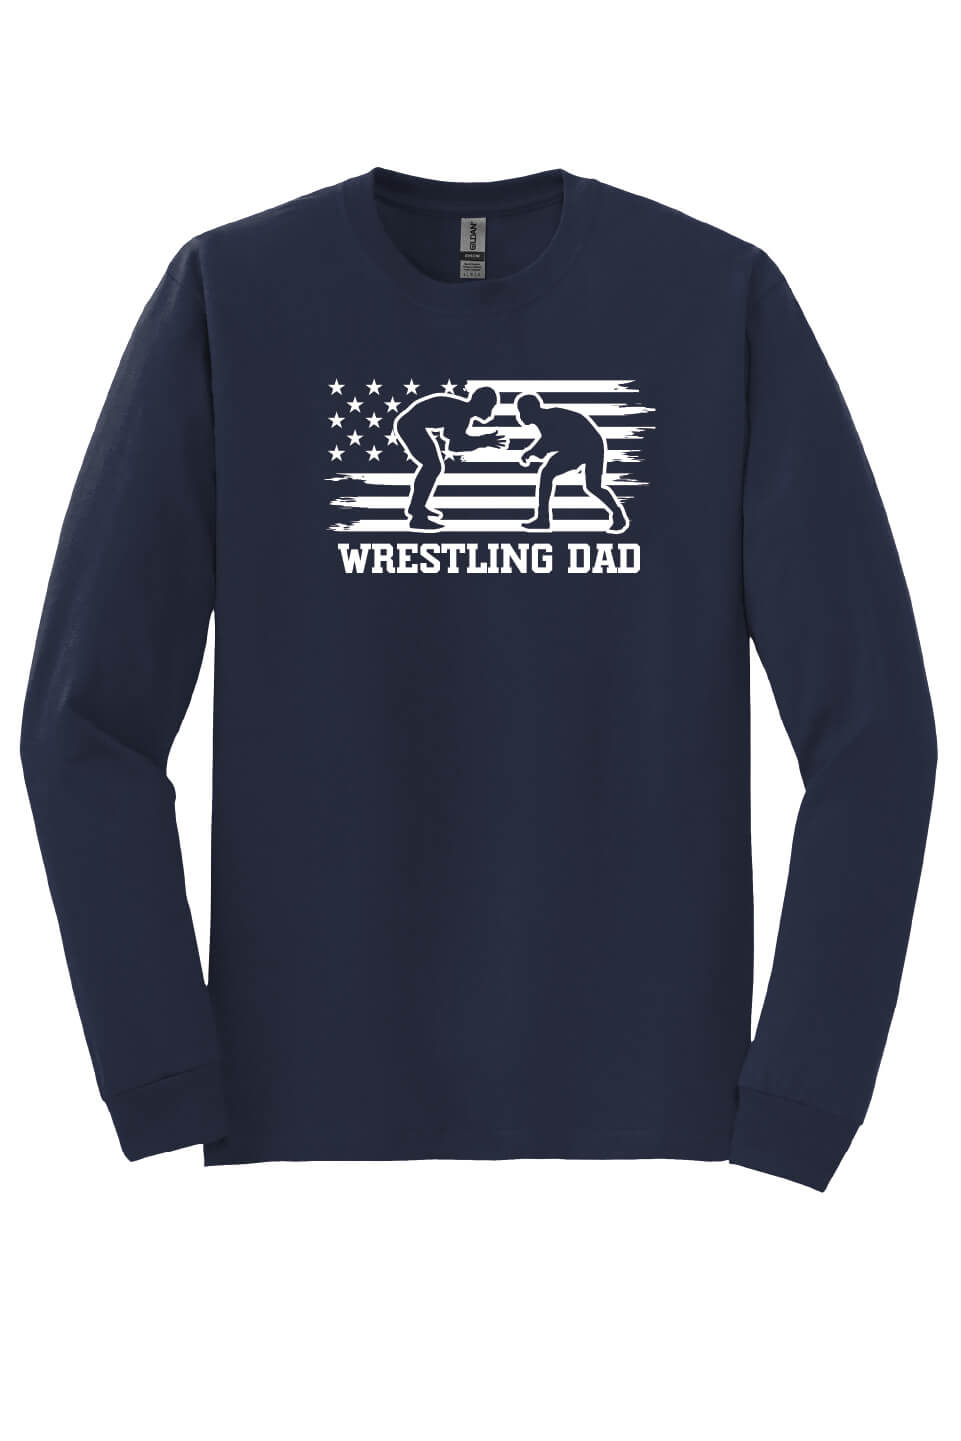 Wrestling Dad Long Sleeve T-Shirt navy